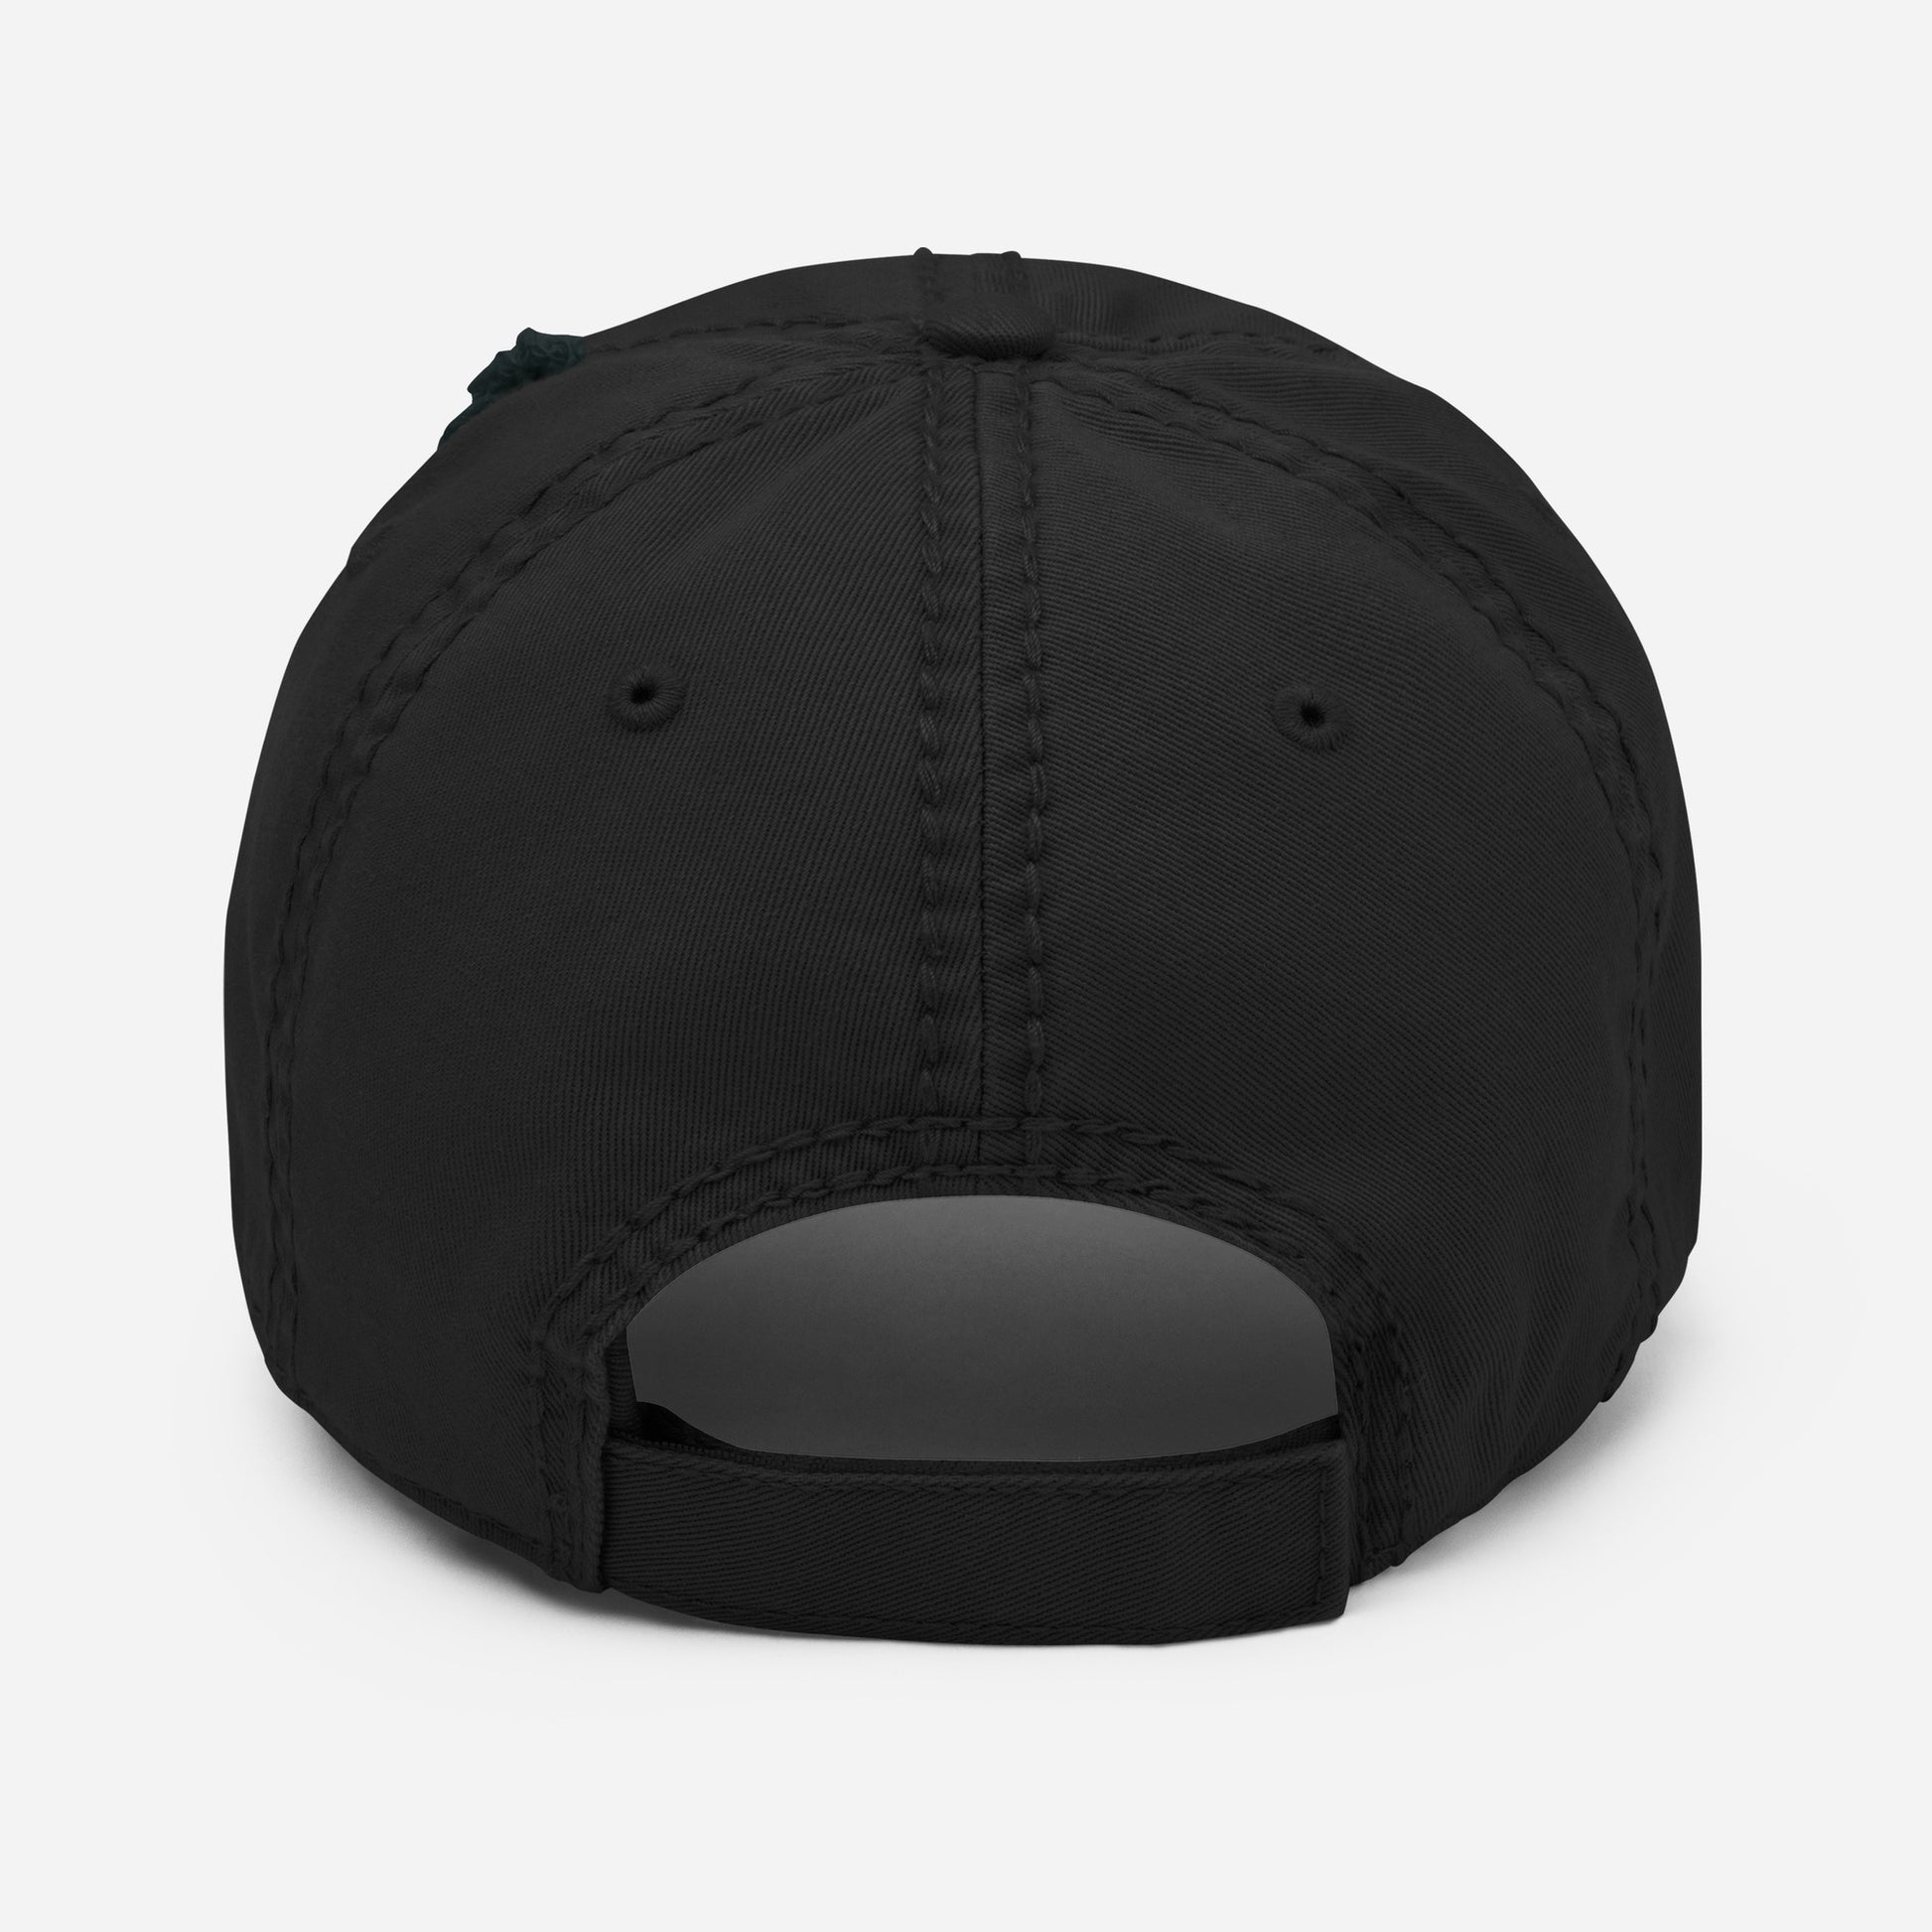 Chosen Distressed Dad Hat (Unisex) - Humble & Faithful Co.